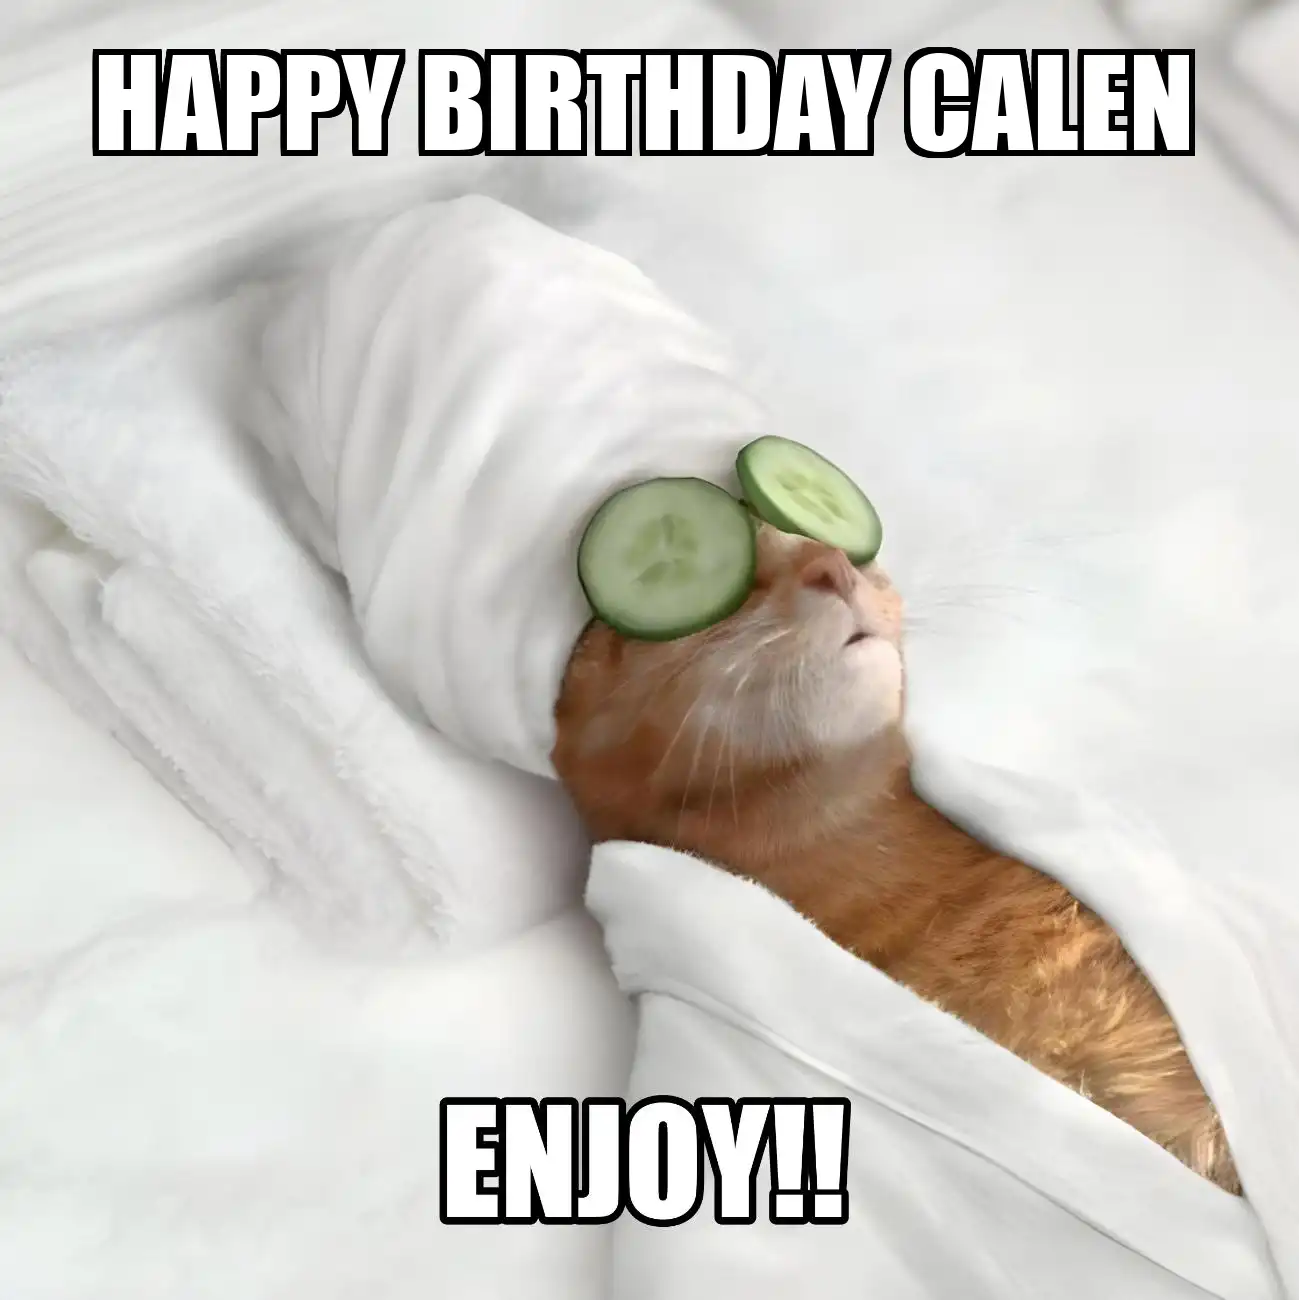 Happy Birthday Calen Enjoy Cat Meme